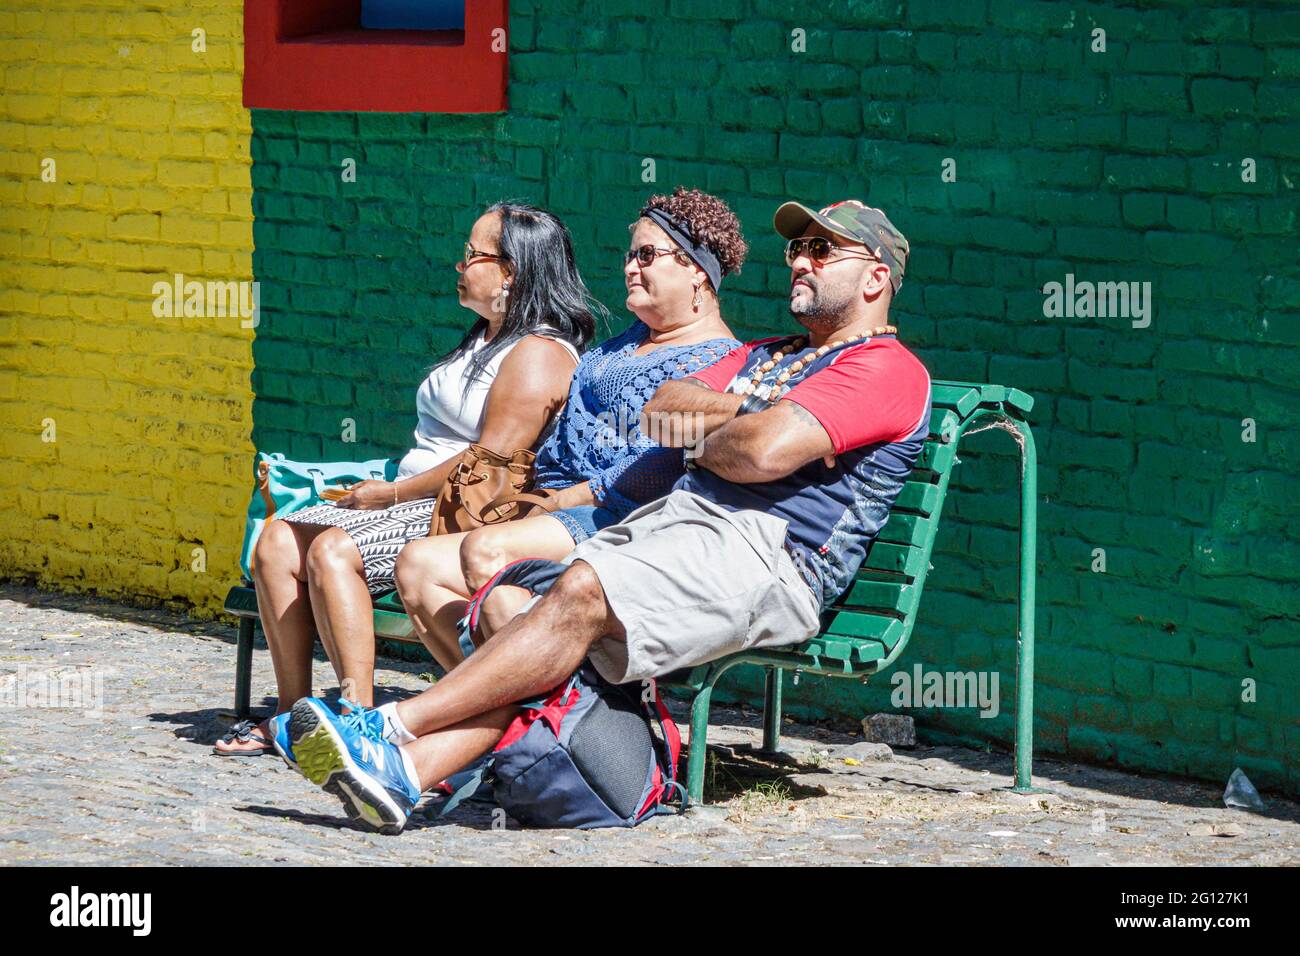 Argentina Buenos Aires Caminito Barrio de la Boca iconic neighborhood cultural landmark Hispanic man woman sitting bench resting Stock Photo